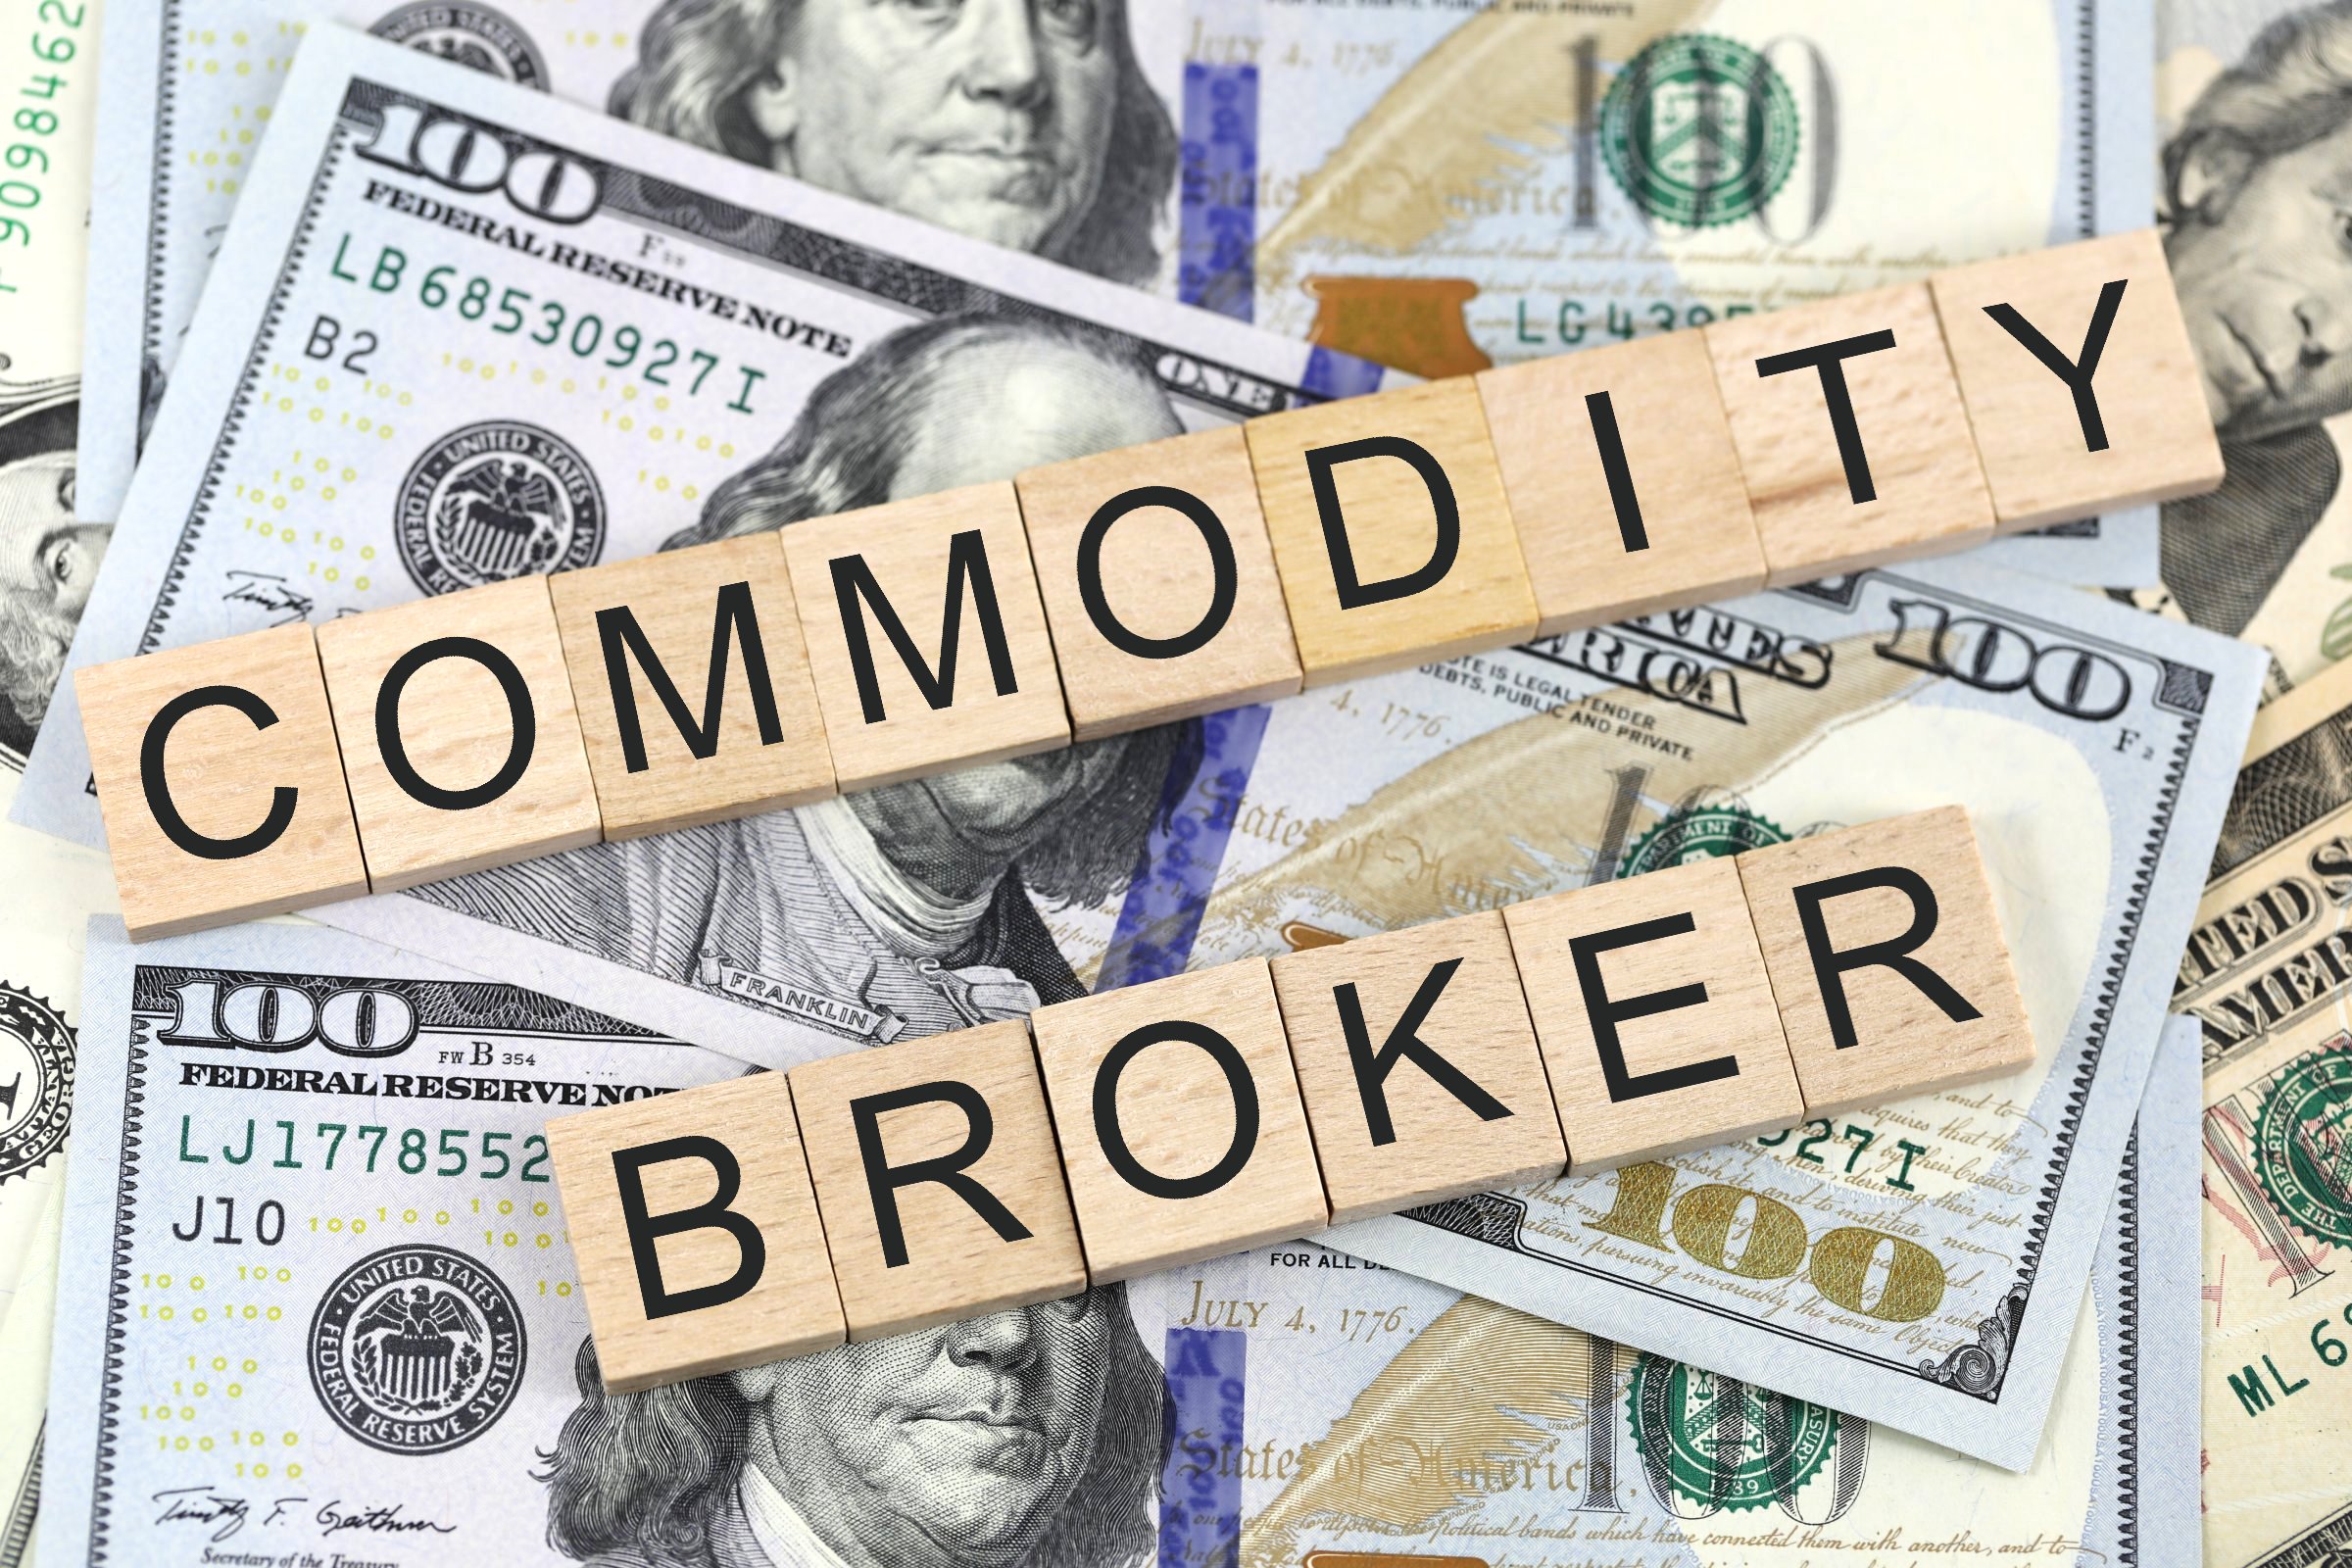 commodity broker